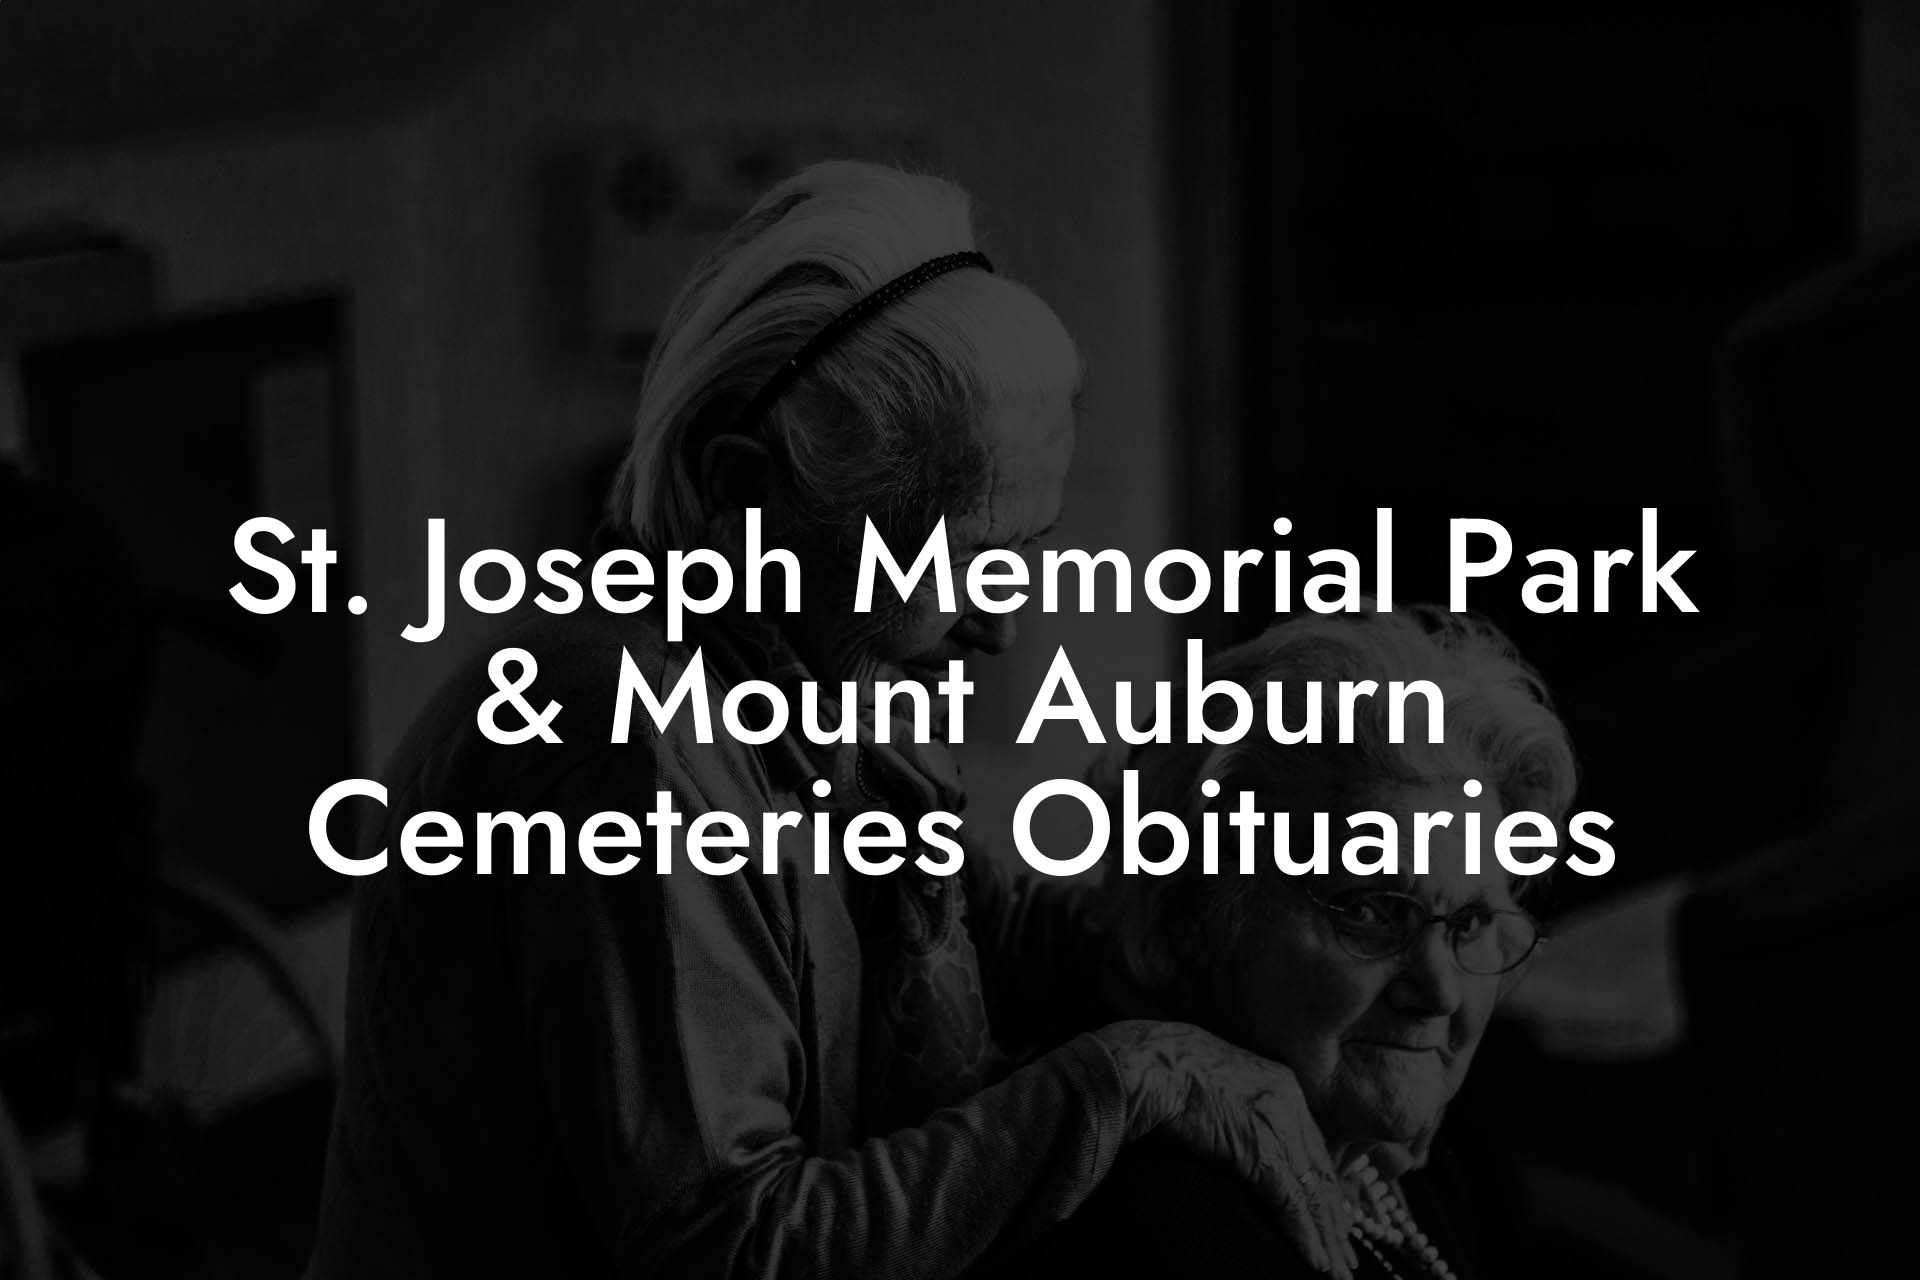 St. Joseph Memorial Park & Mount Auburn Cemeteries Obituaries